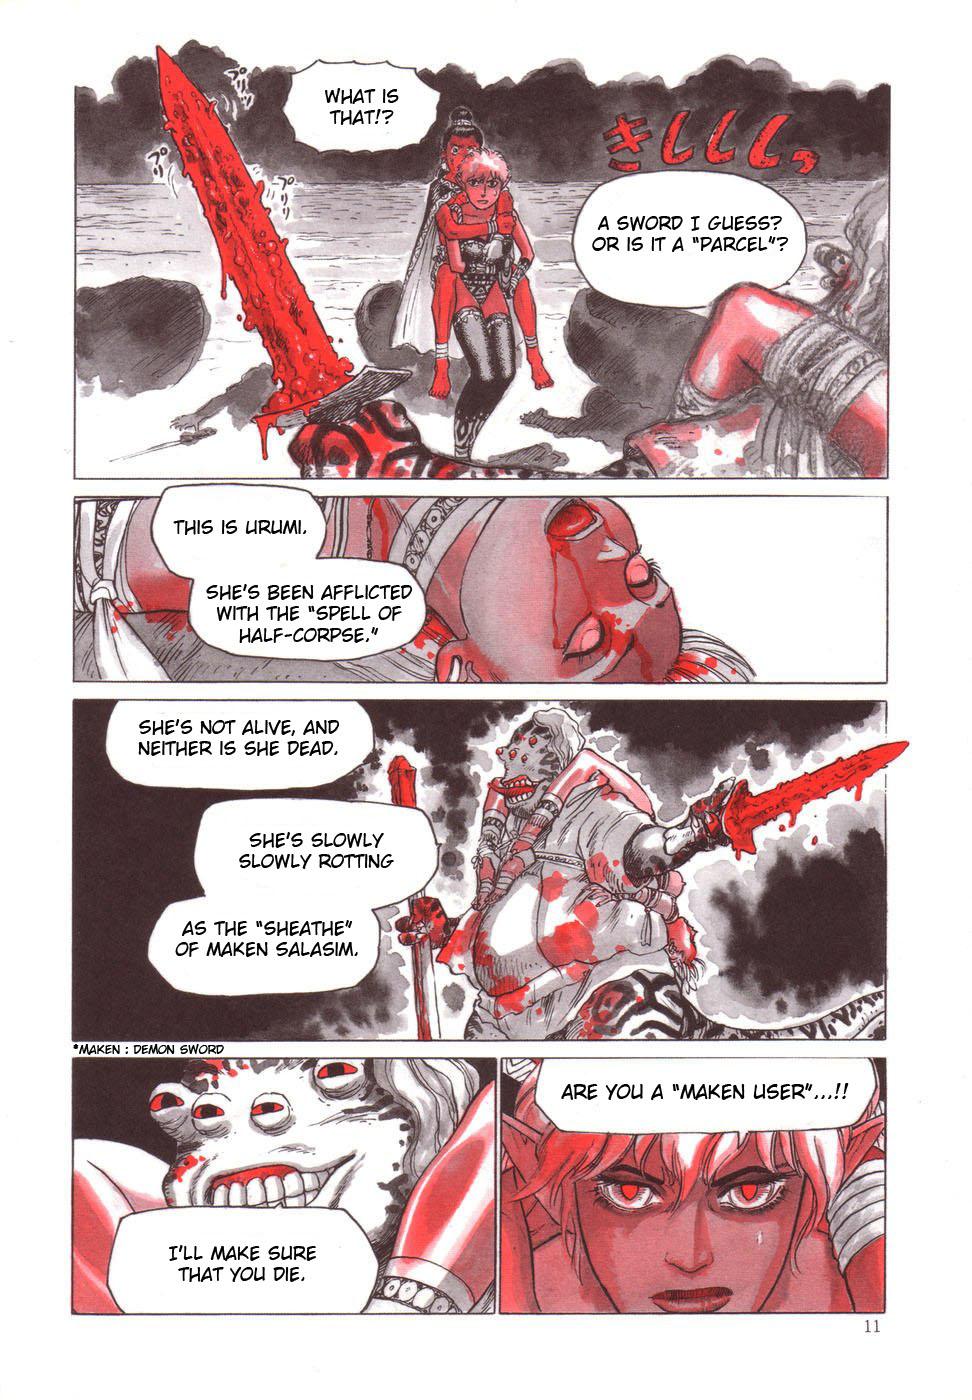 Nasty Rotten Sword Juicy - Page 11